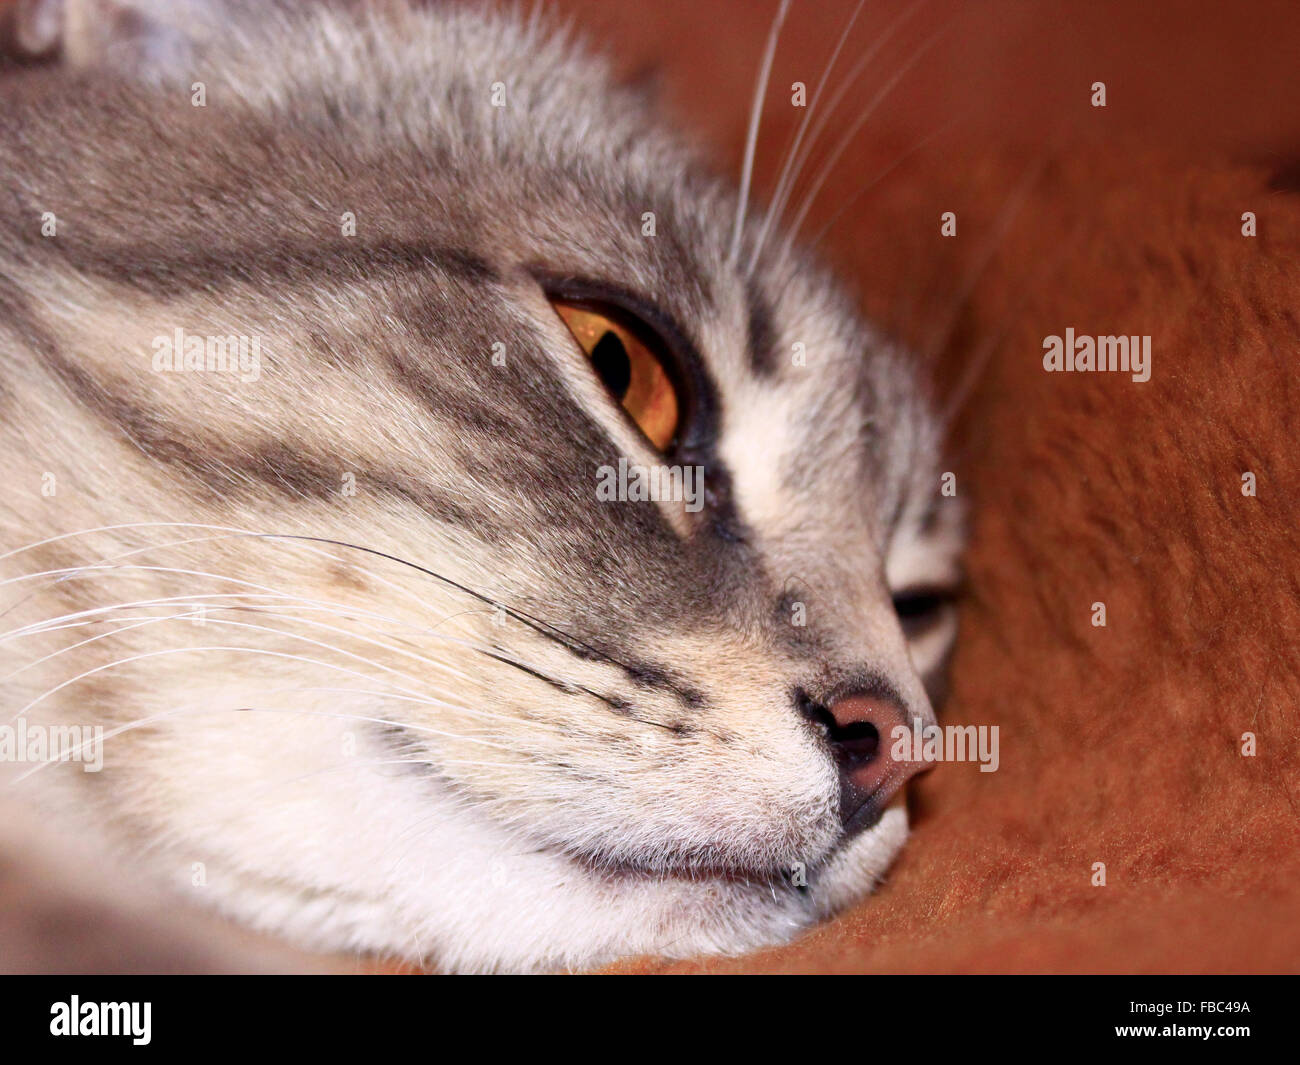 close-up of muzzle of Scottish Straight cat Stock Photo